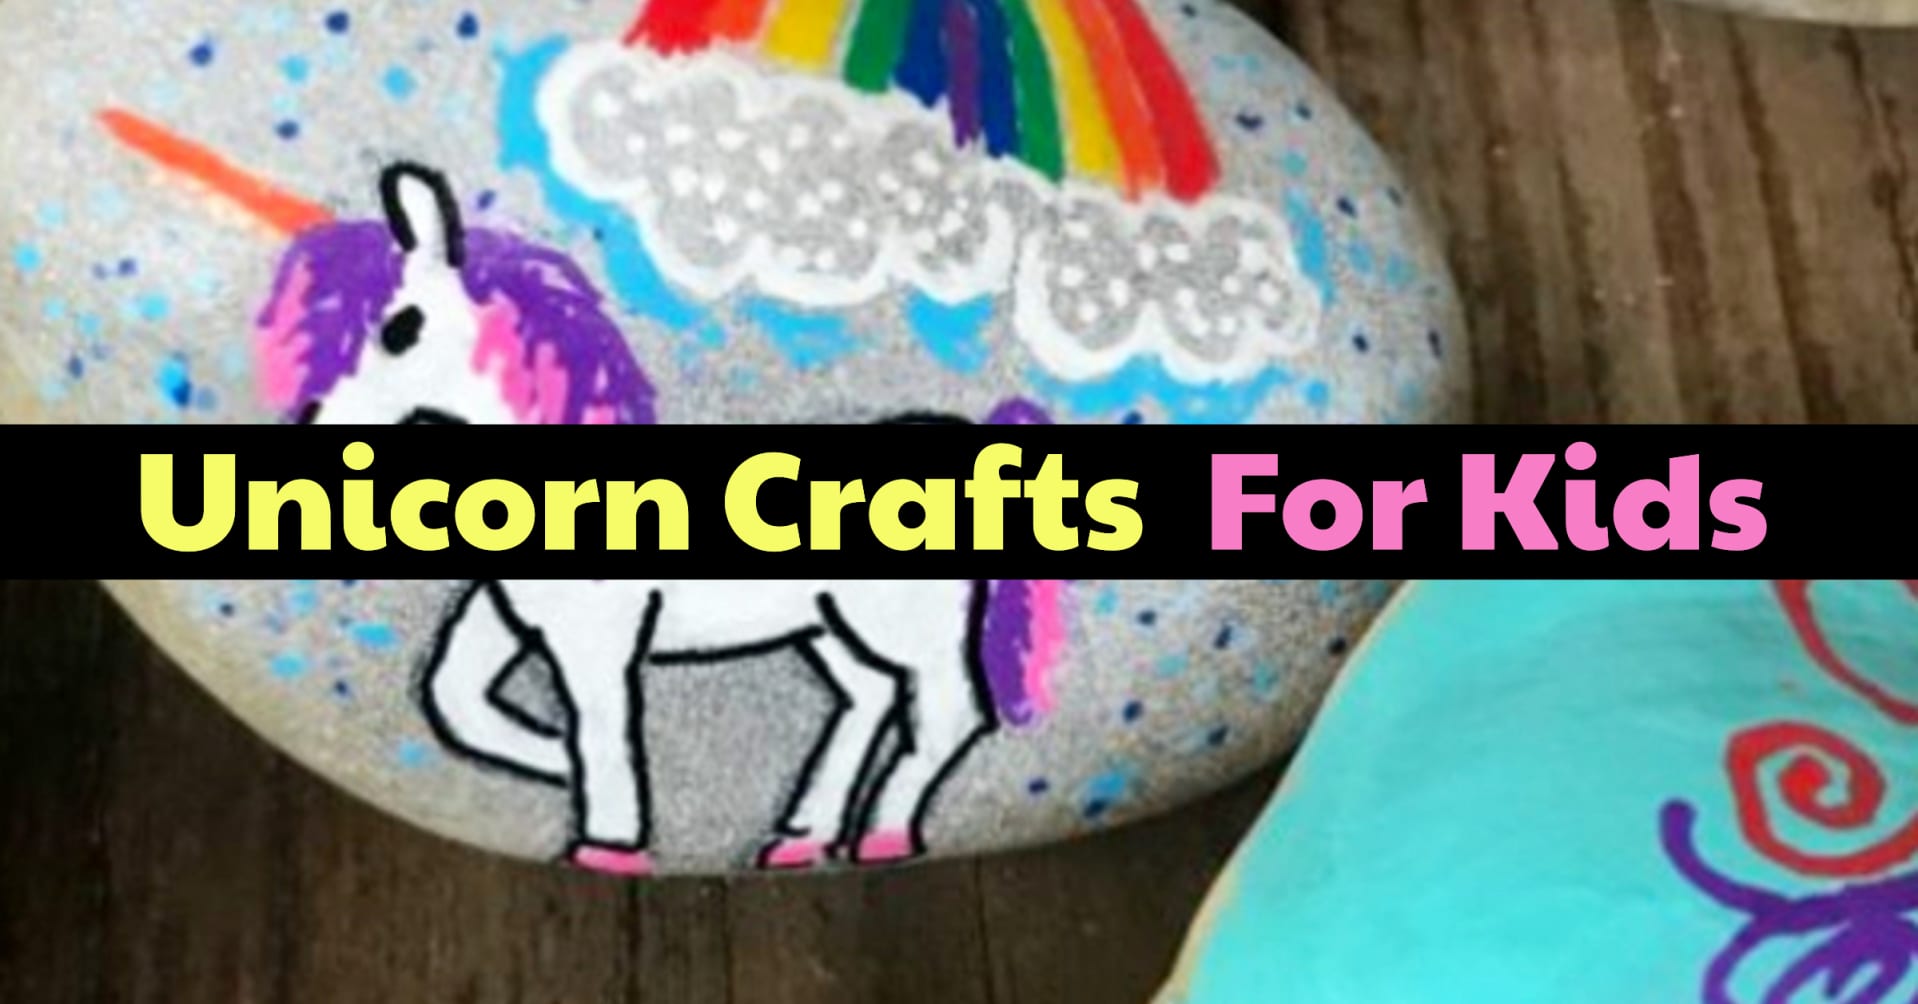 Unicorn crafts for kids to make